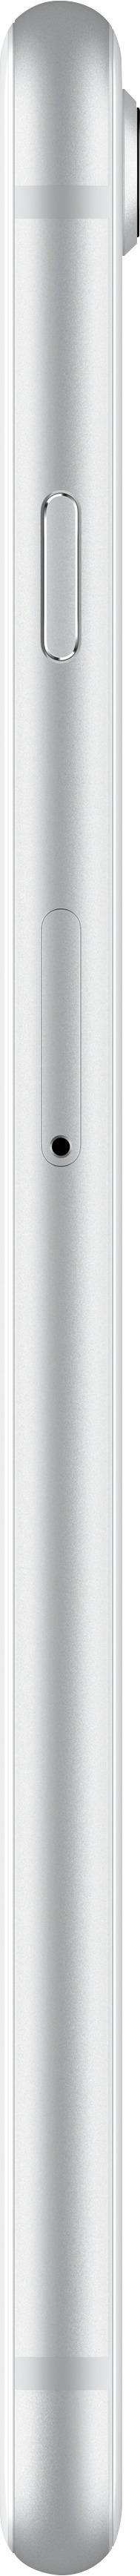 IPhone 8 Plus 64GB - Silver - Ola Tech